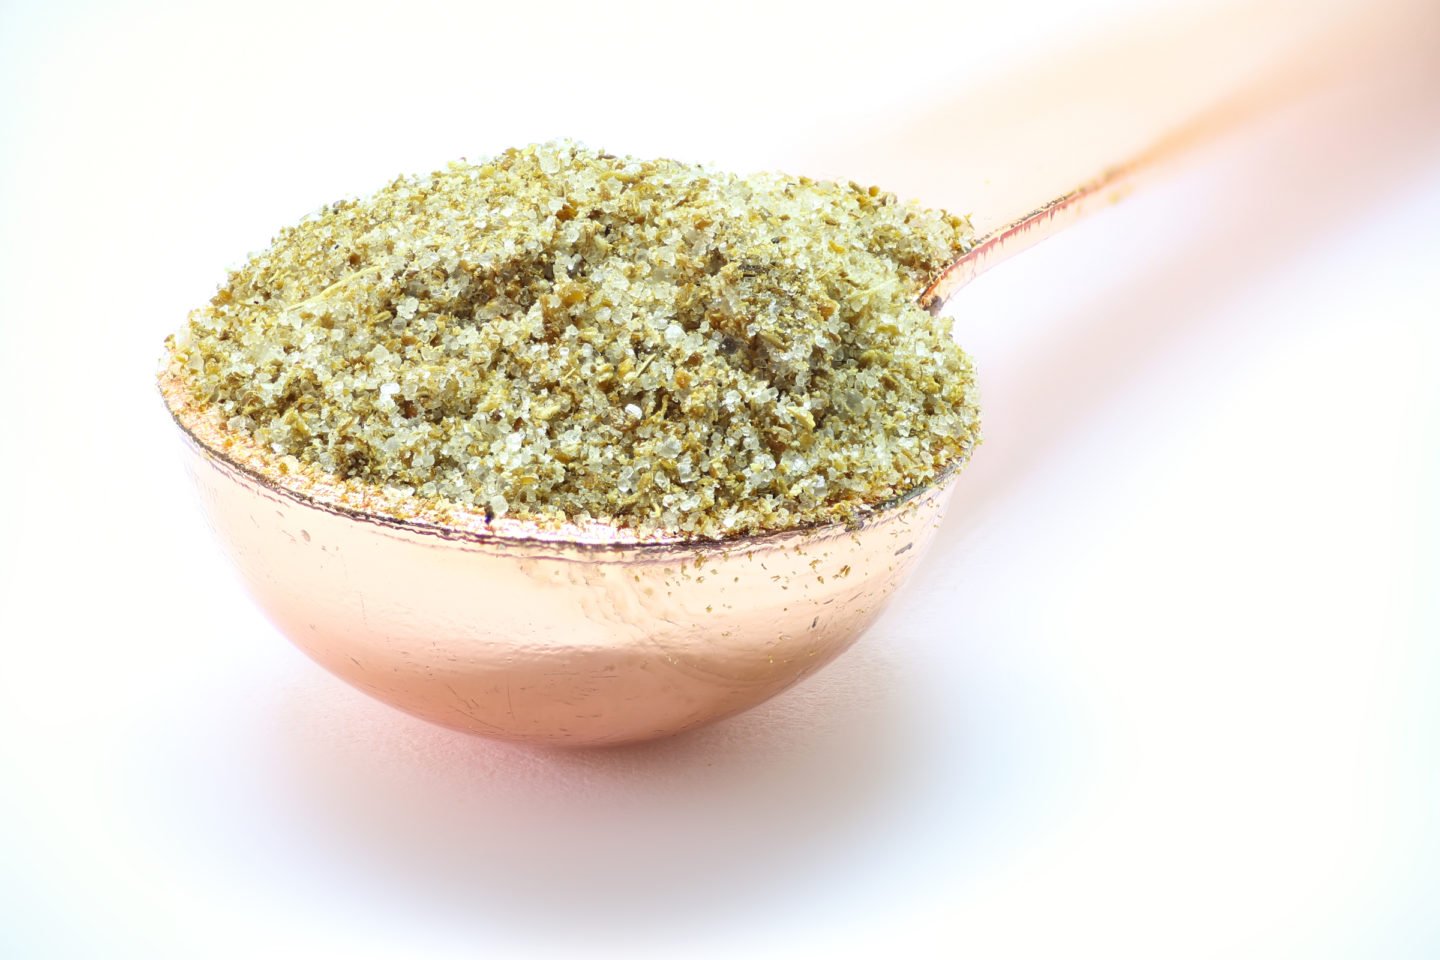 authentic celery salt mix in a bowl